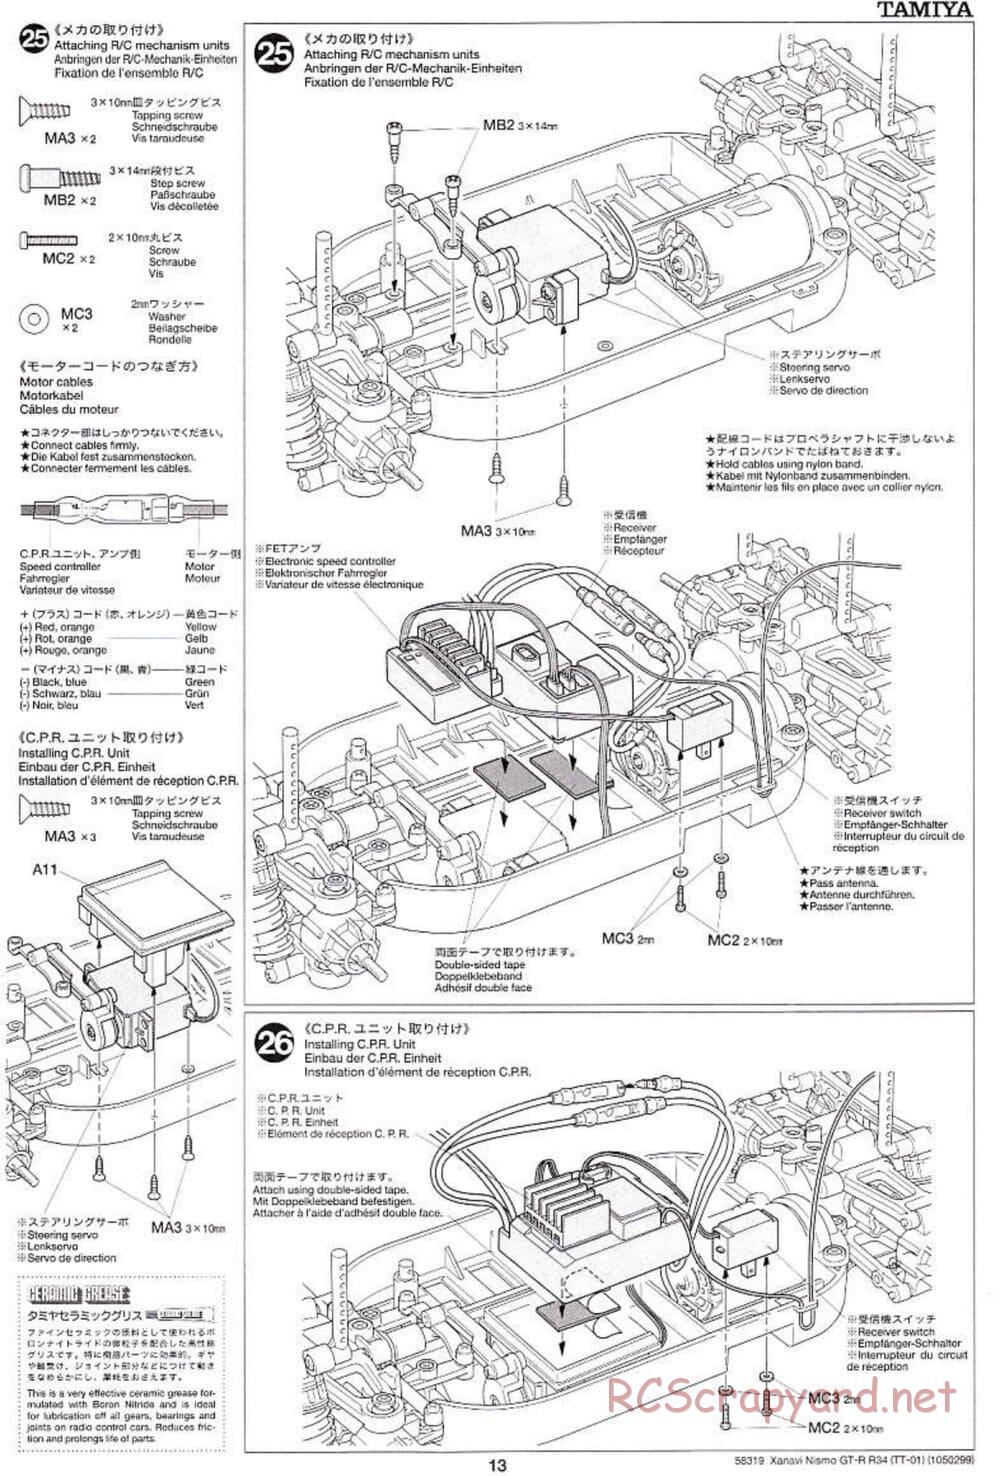 Tamiya - Xanavi Nismo GT-R R34 - TT-01 Chassis - Manual - Page 13